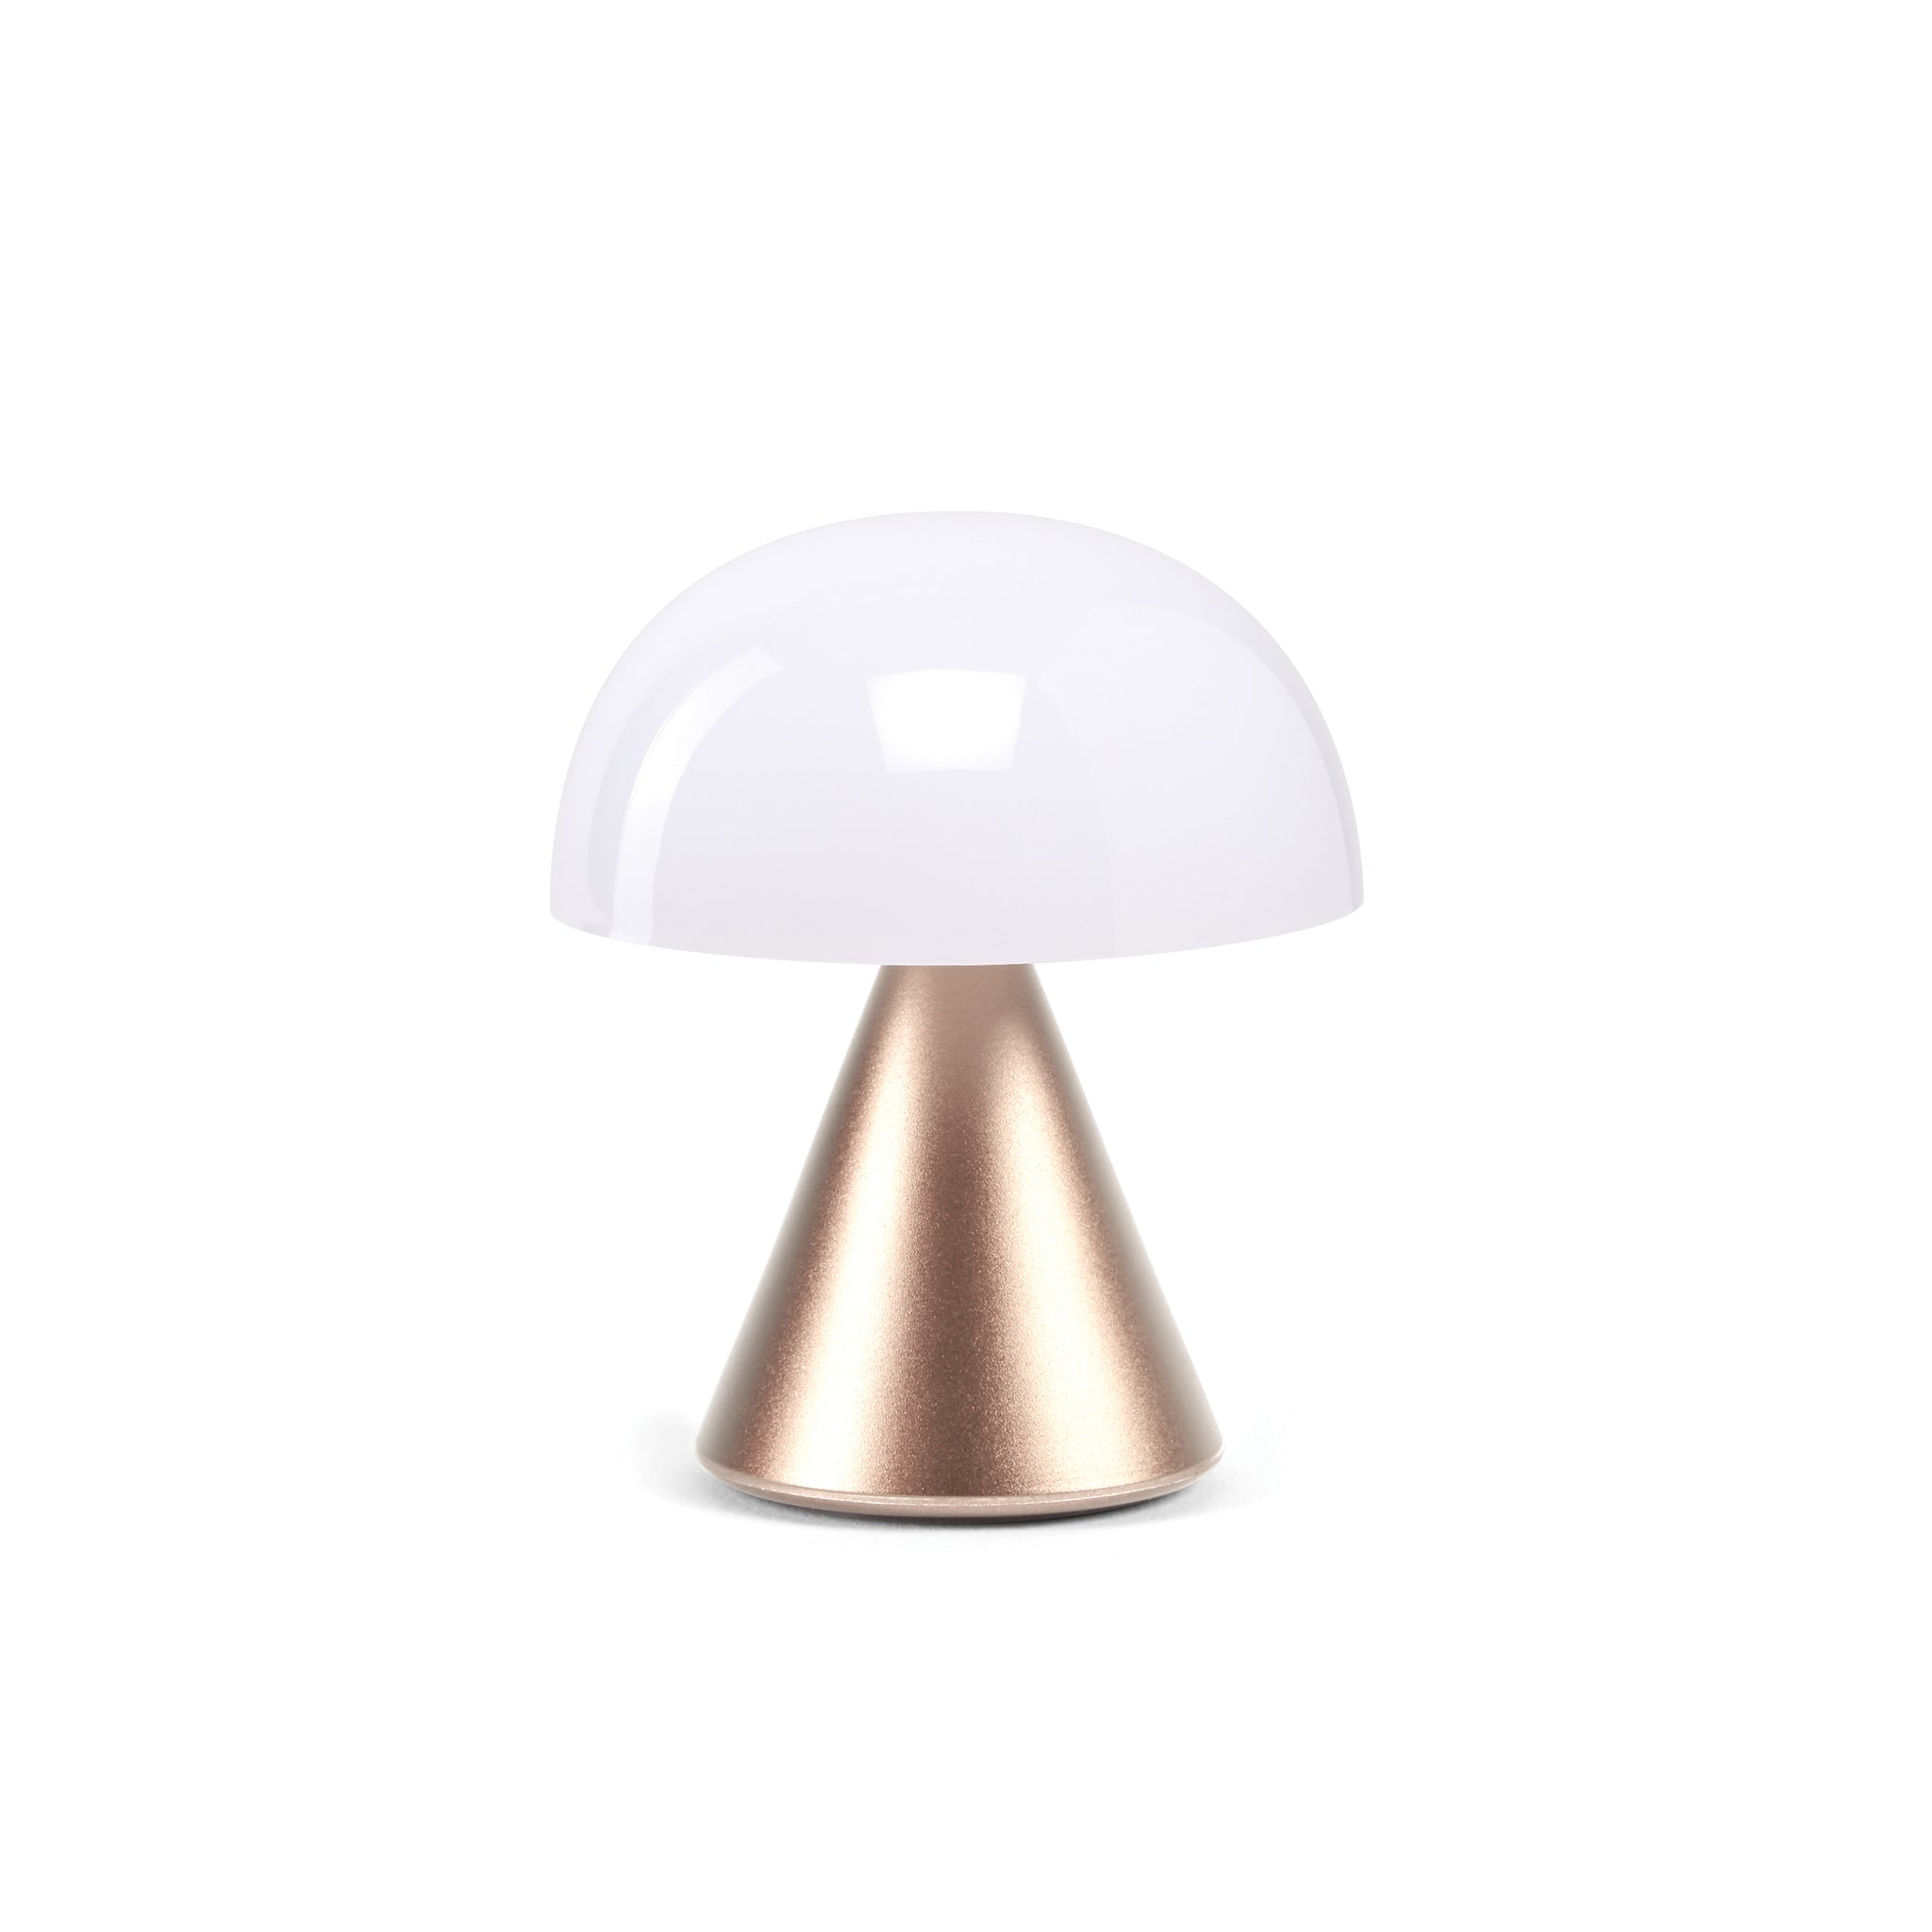 Lexon Mina Small Soft Gold│Oplaadbare LED lamp│art. LH60MD│vooraanzicht met licht uit